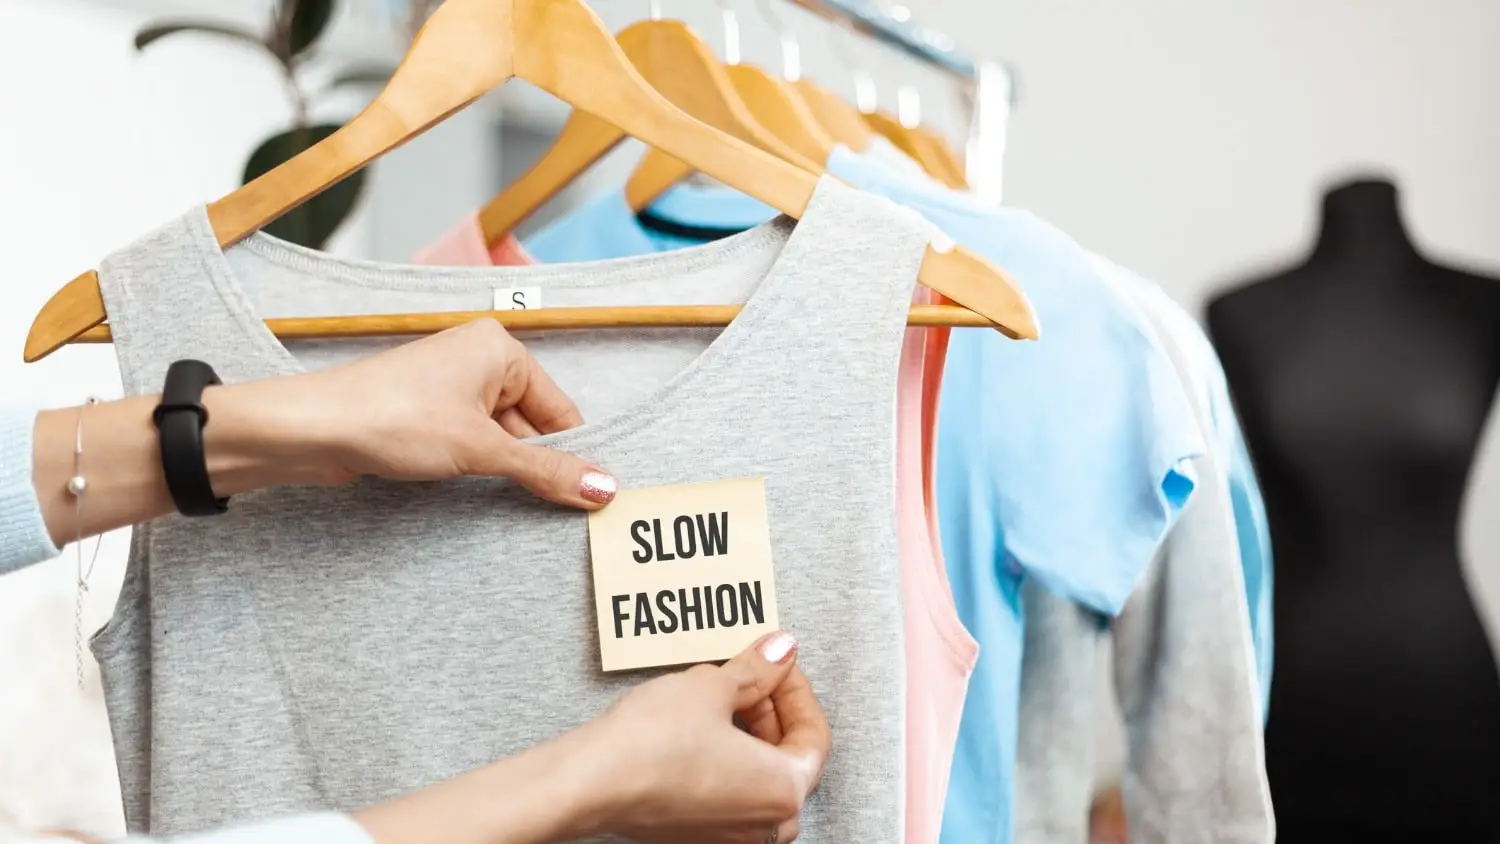 slow fashion clothing manufacturer responsible brand